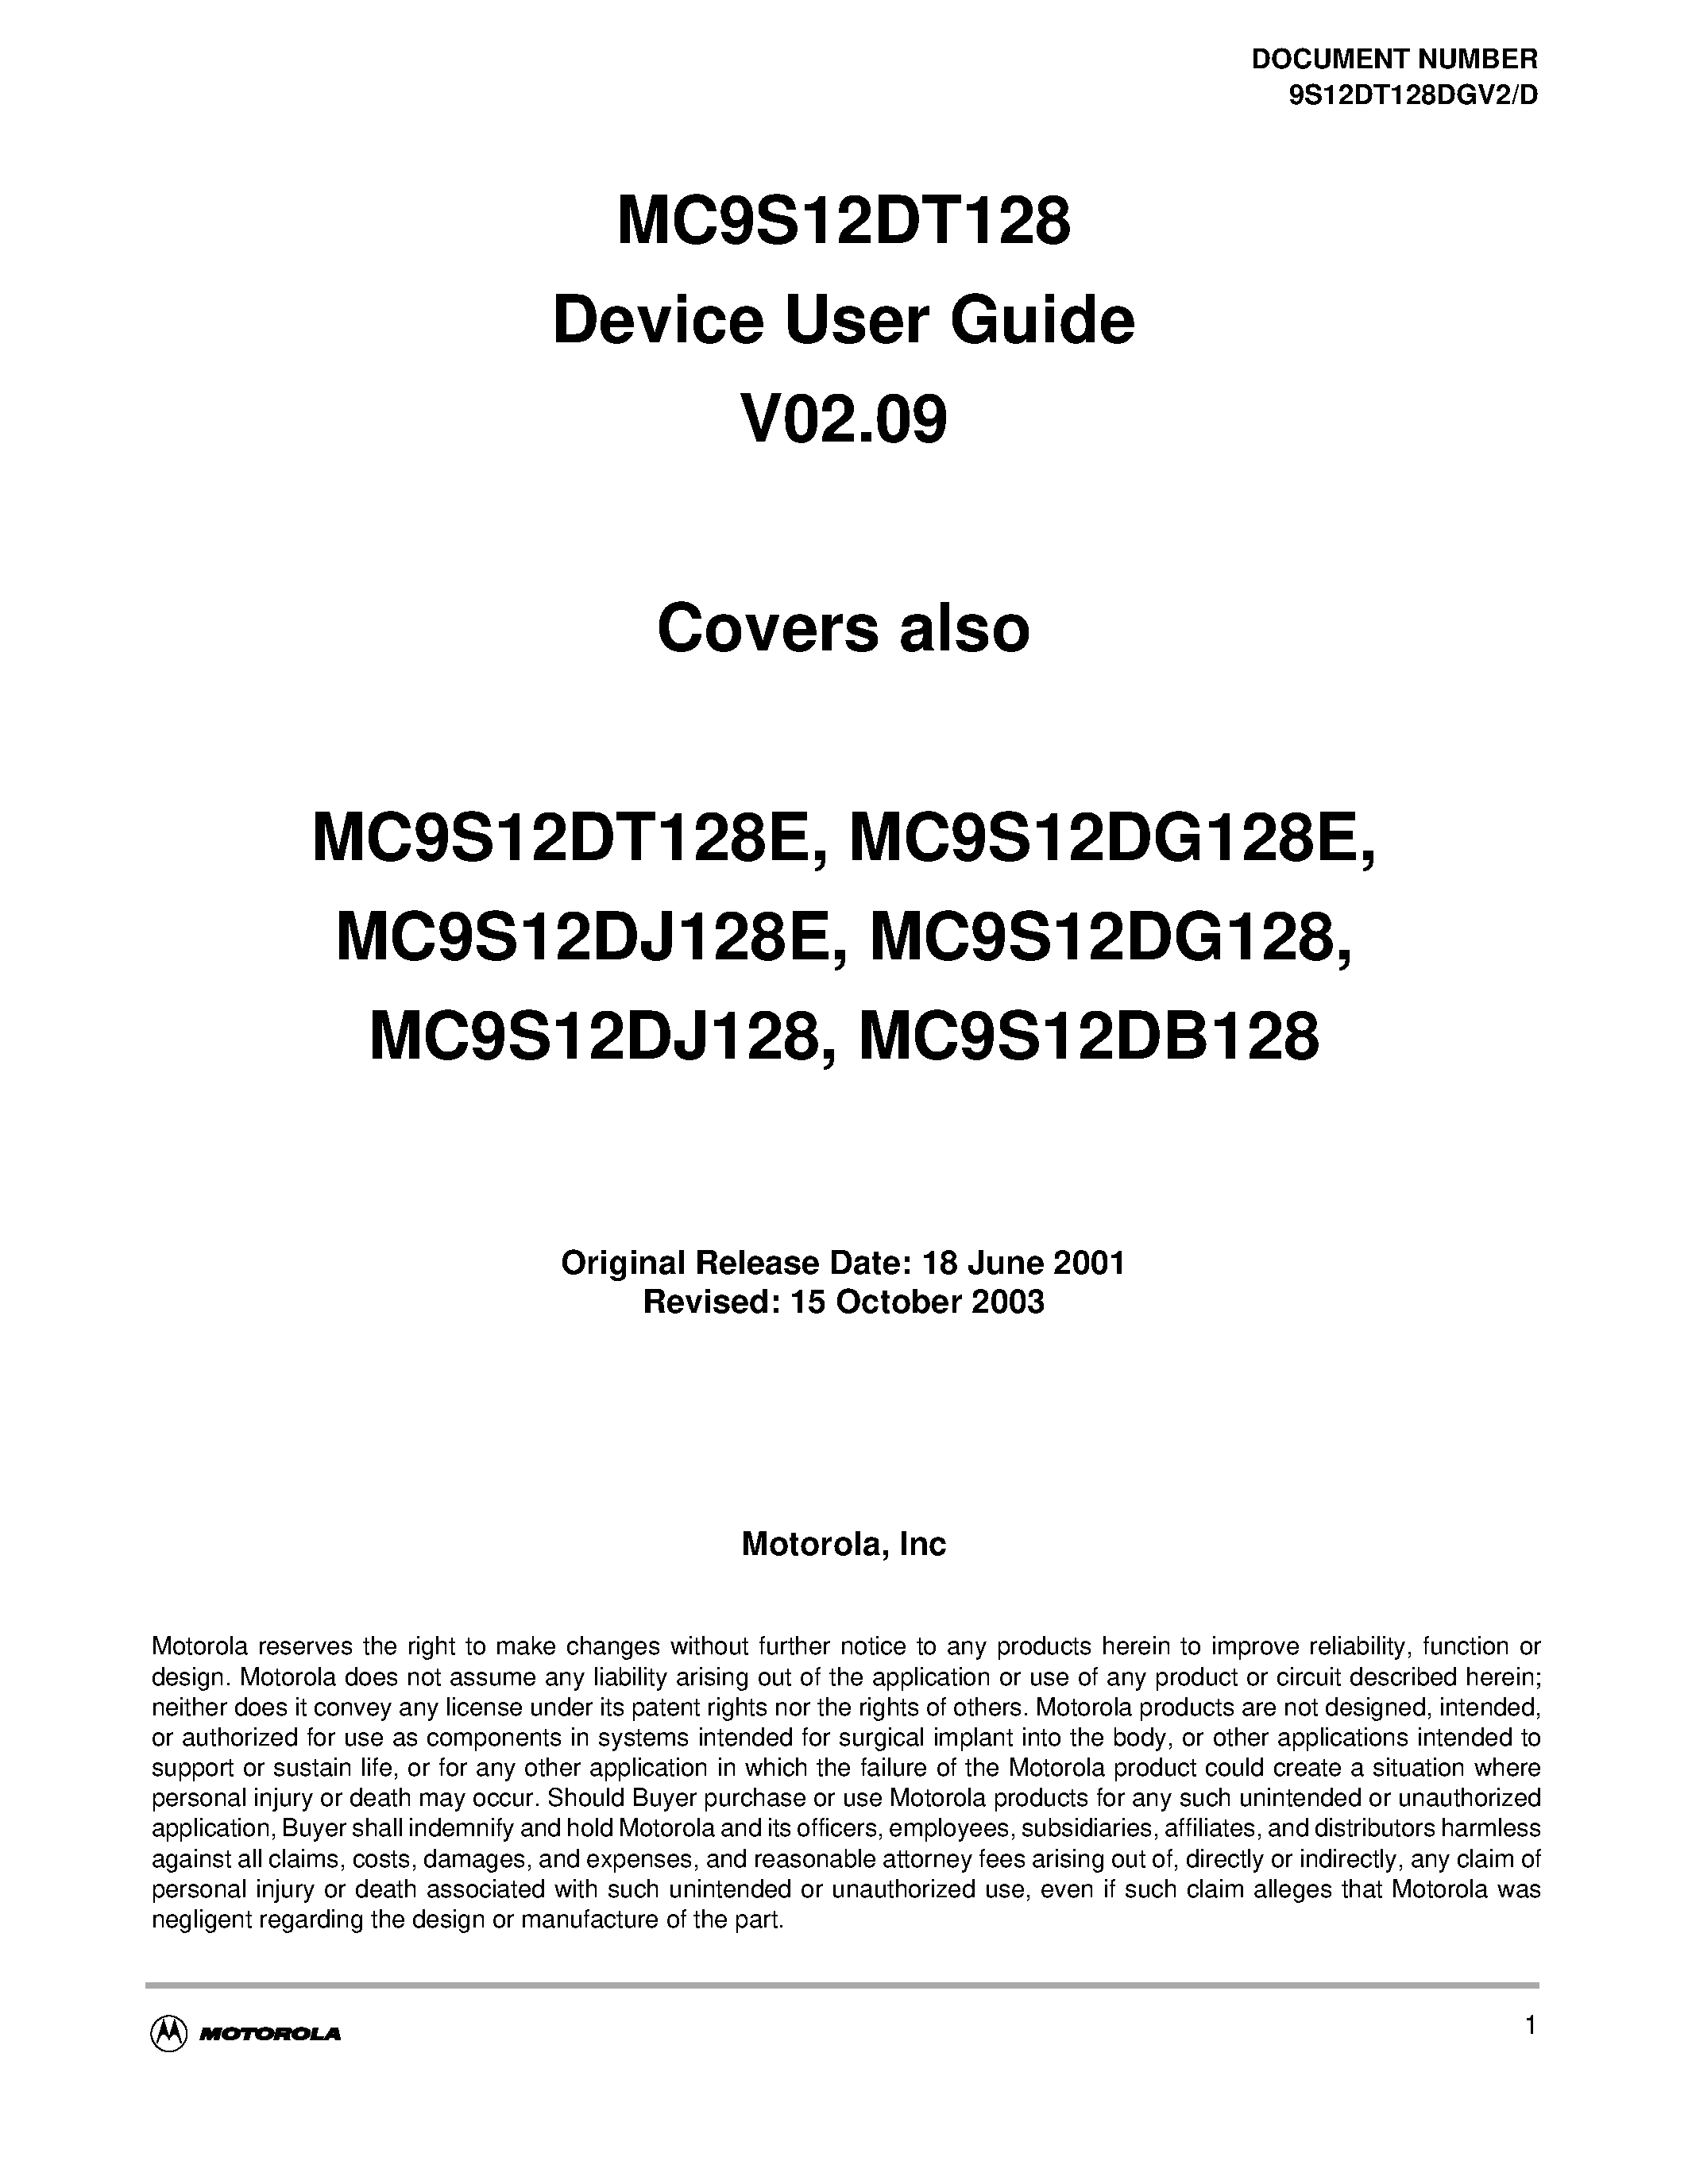 Datasheet S12OSCV2 - MC9S12DT128 Device User Guide V02.09 page 1